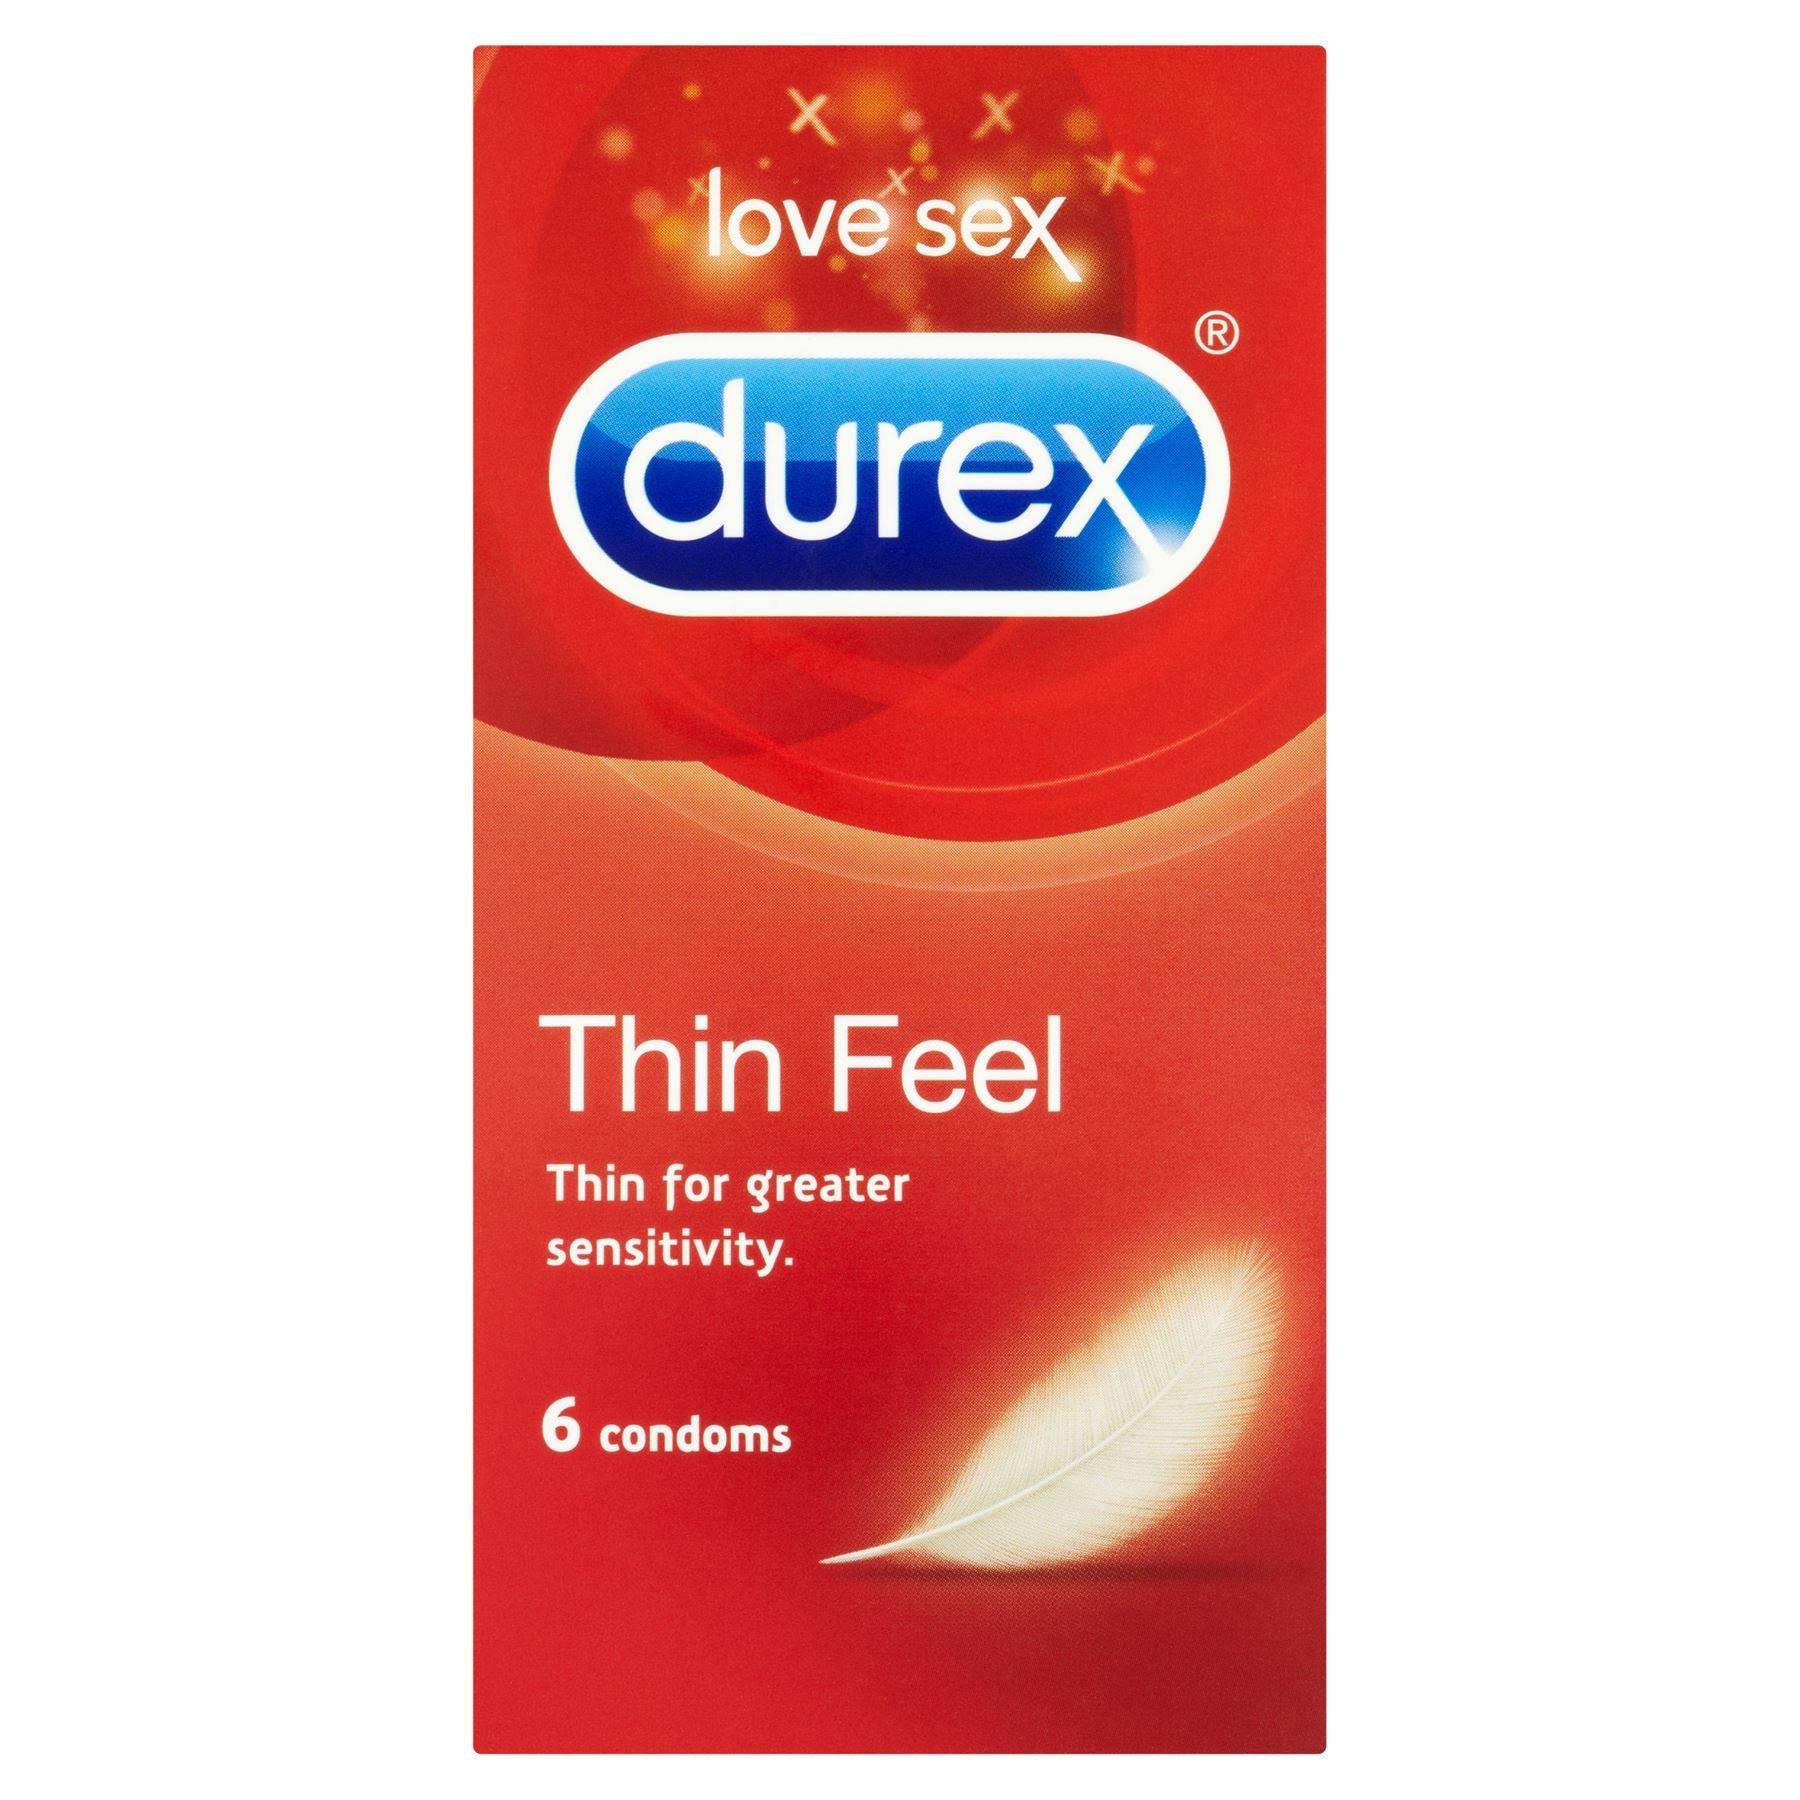 Durex Thin Feel Condoms - 6pcs